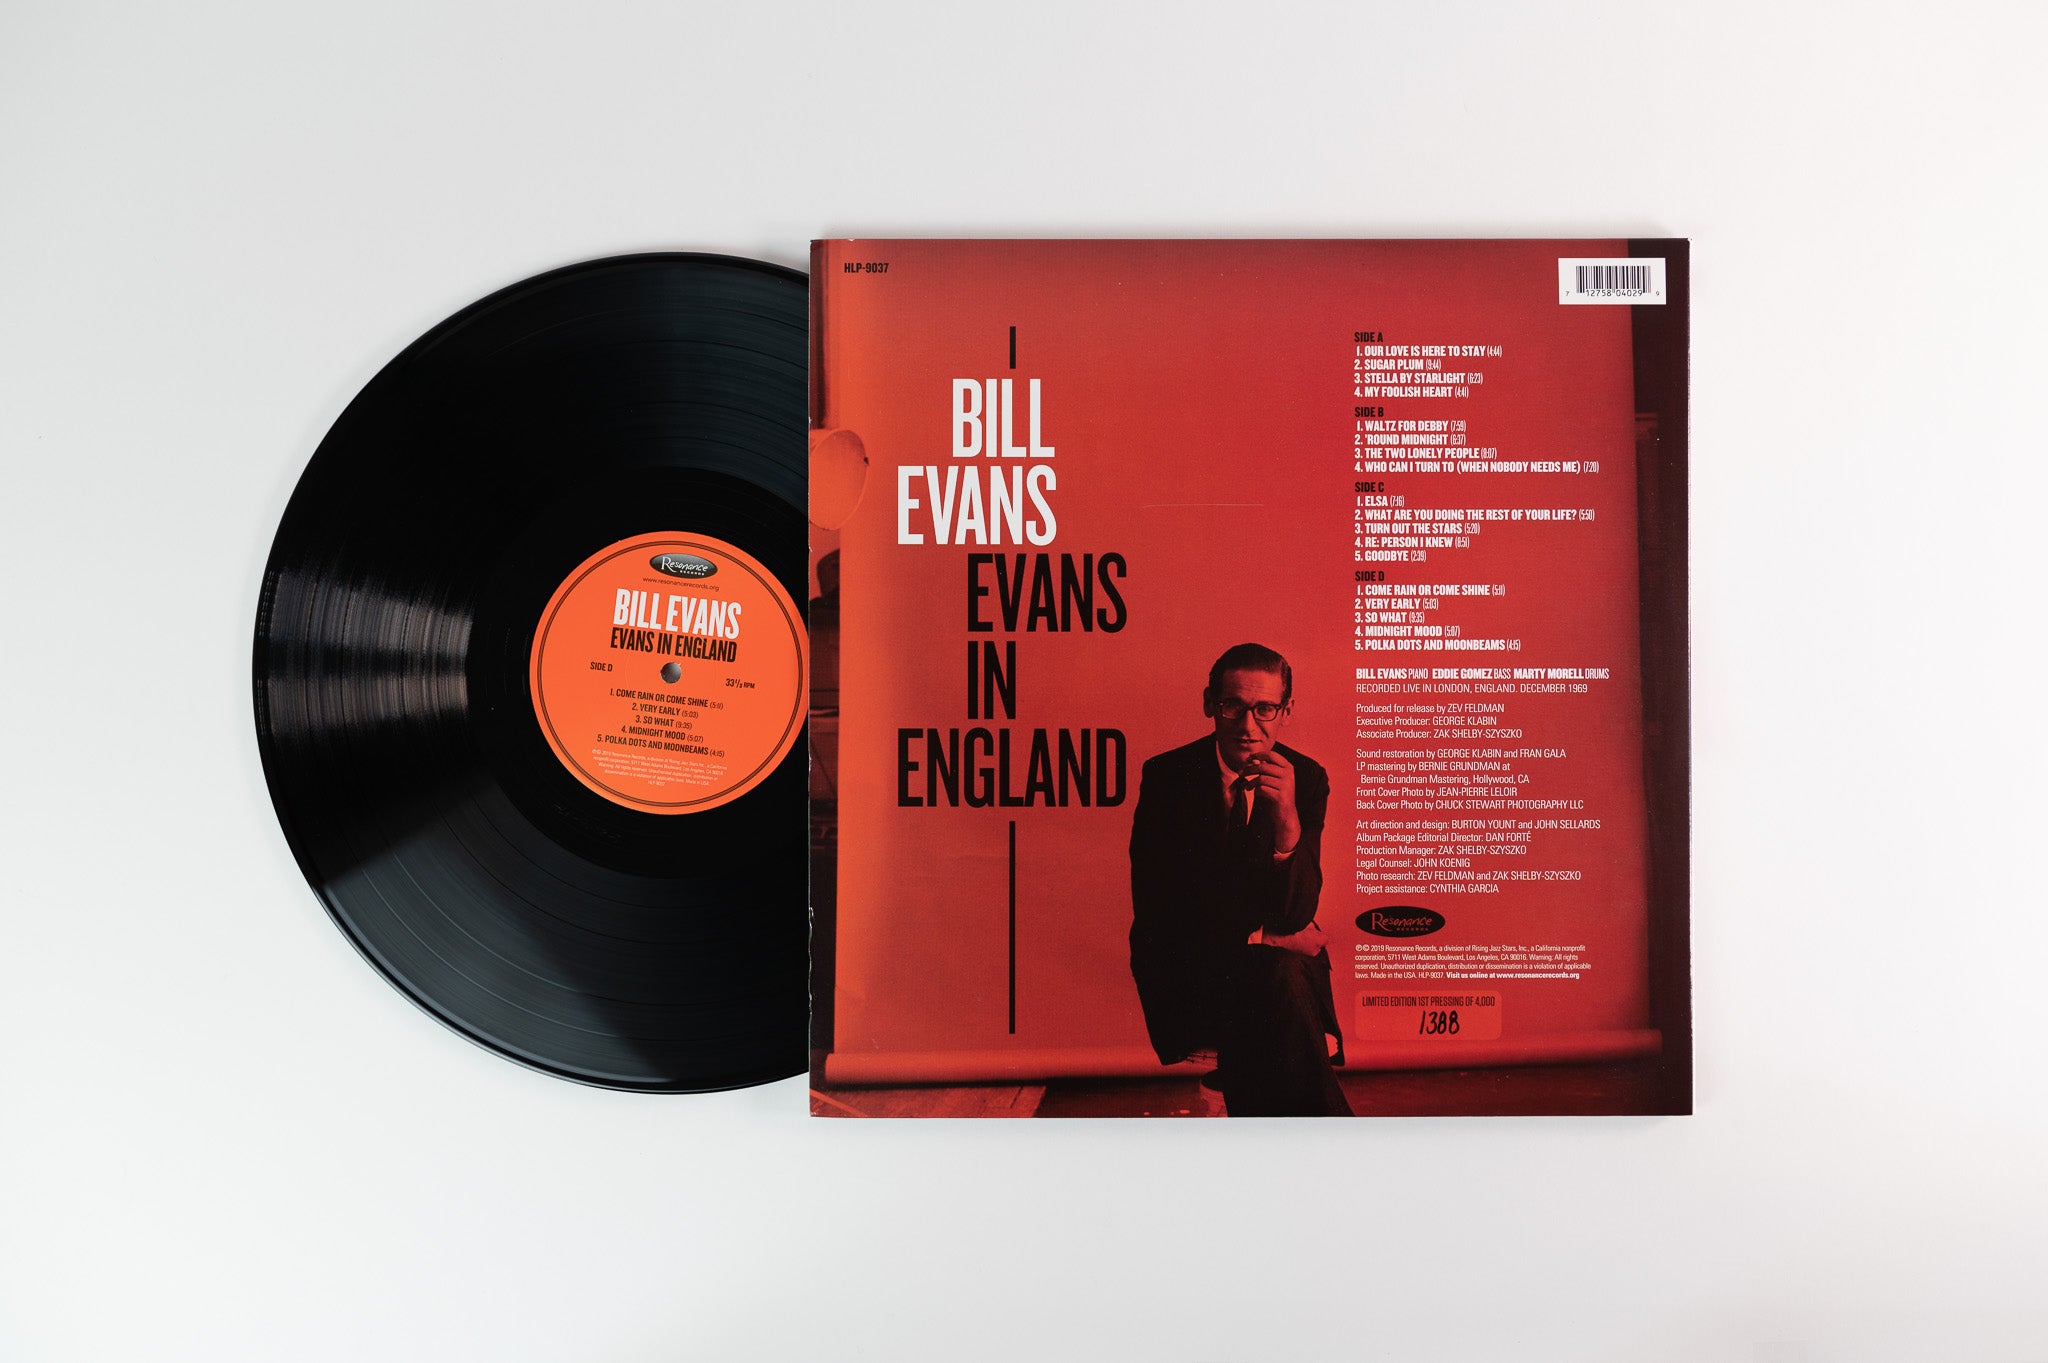 Bill Evans - Evans In England on Resonance Ltd Numbered Deluxe Pressing